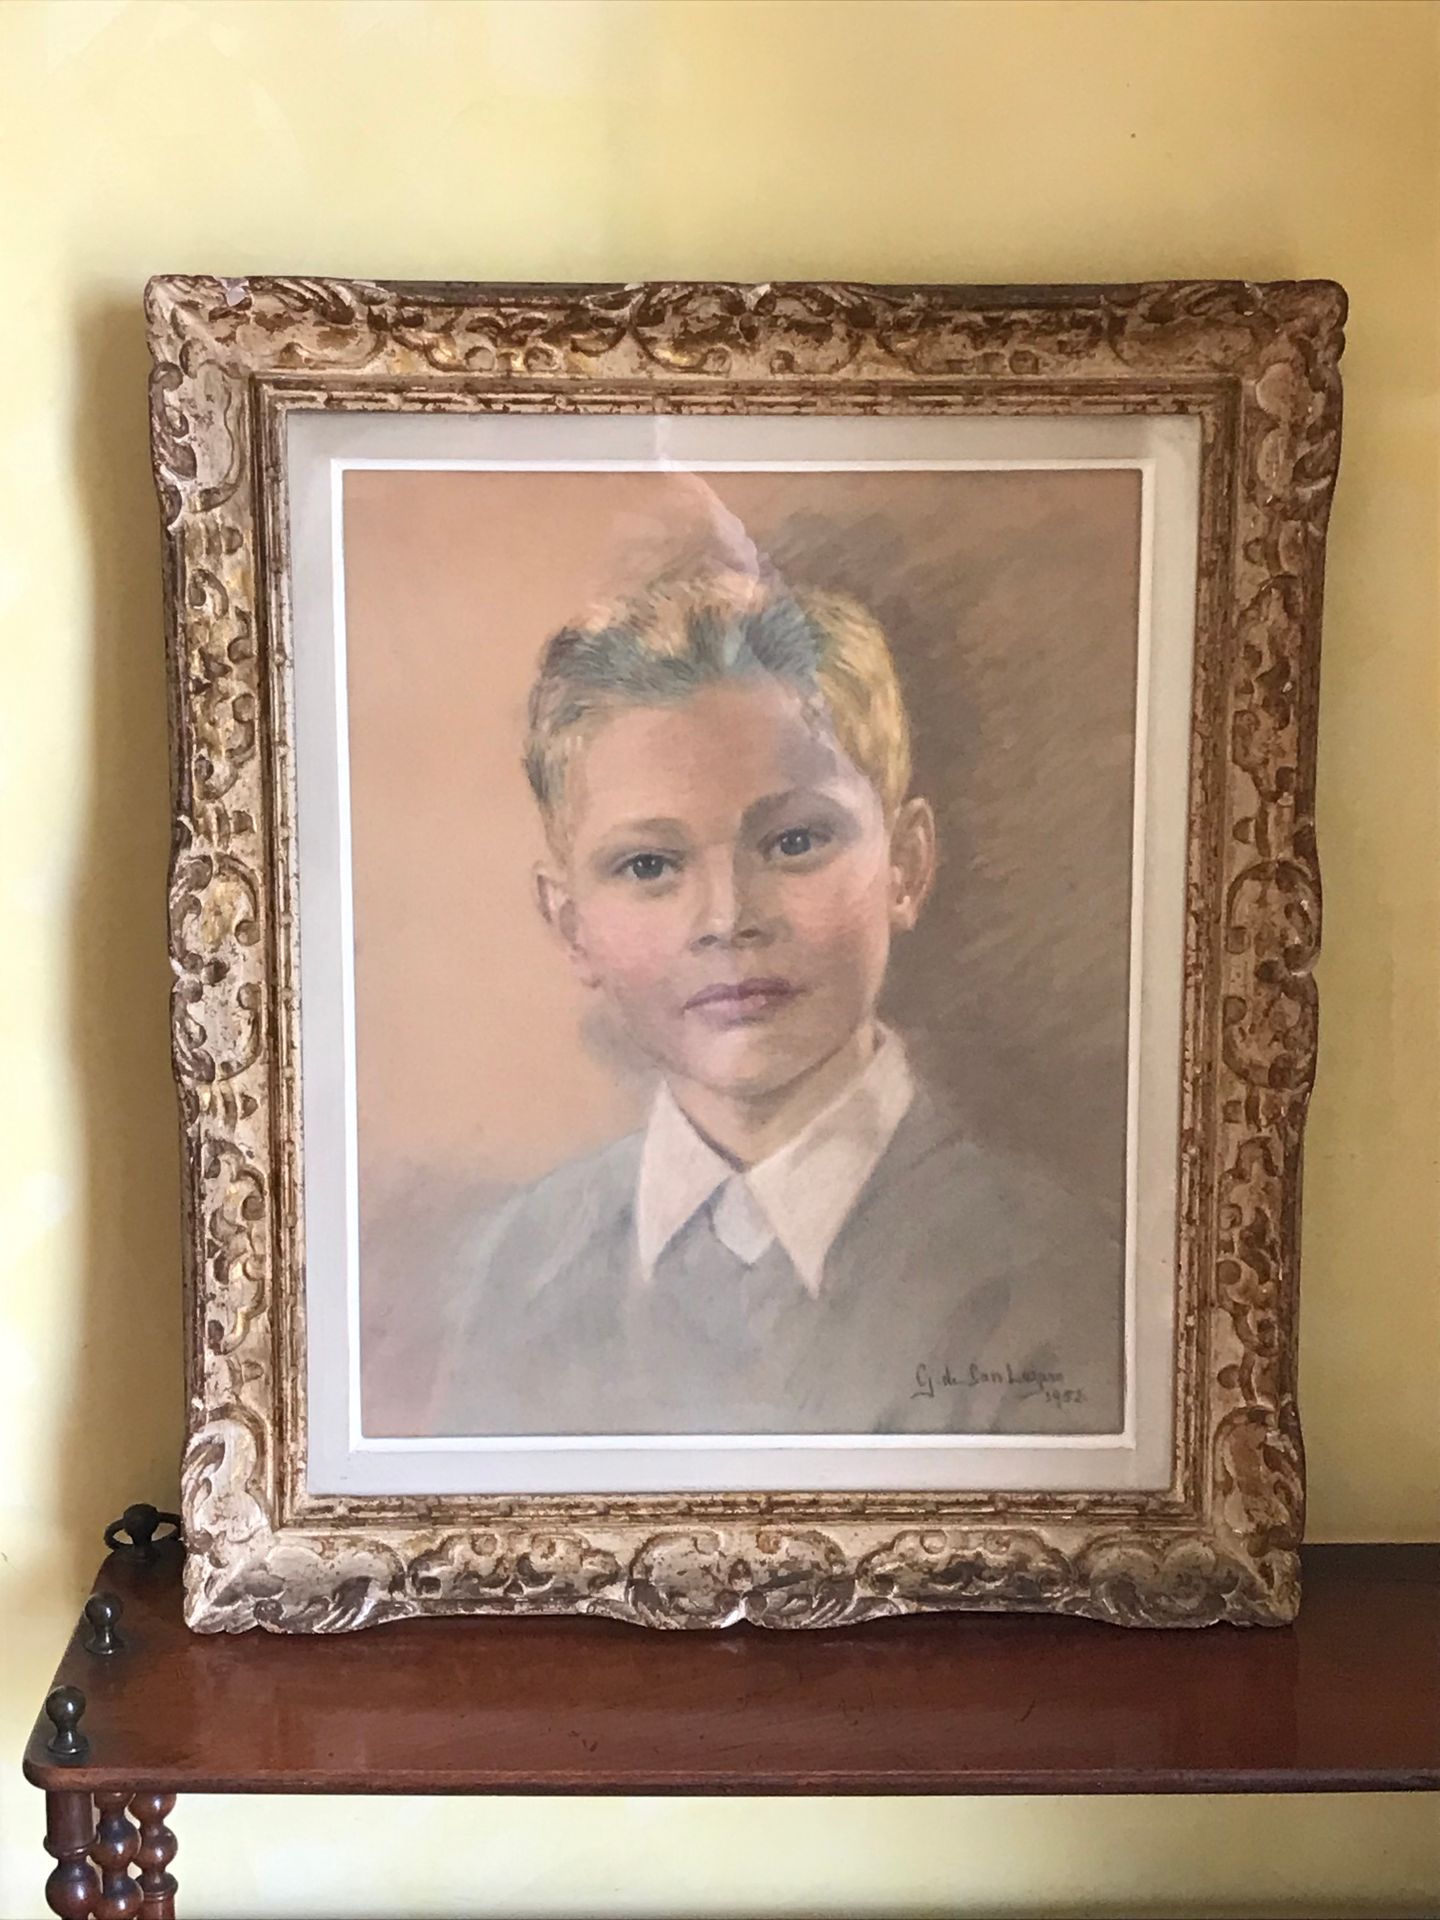 G. De SAN LAZARO G. De SAN LAZARO
一个小男孩的肖像。粉彩画。左下角有签名，日期为1952年。 
39 x 31 cm。